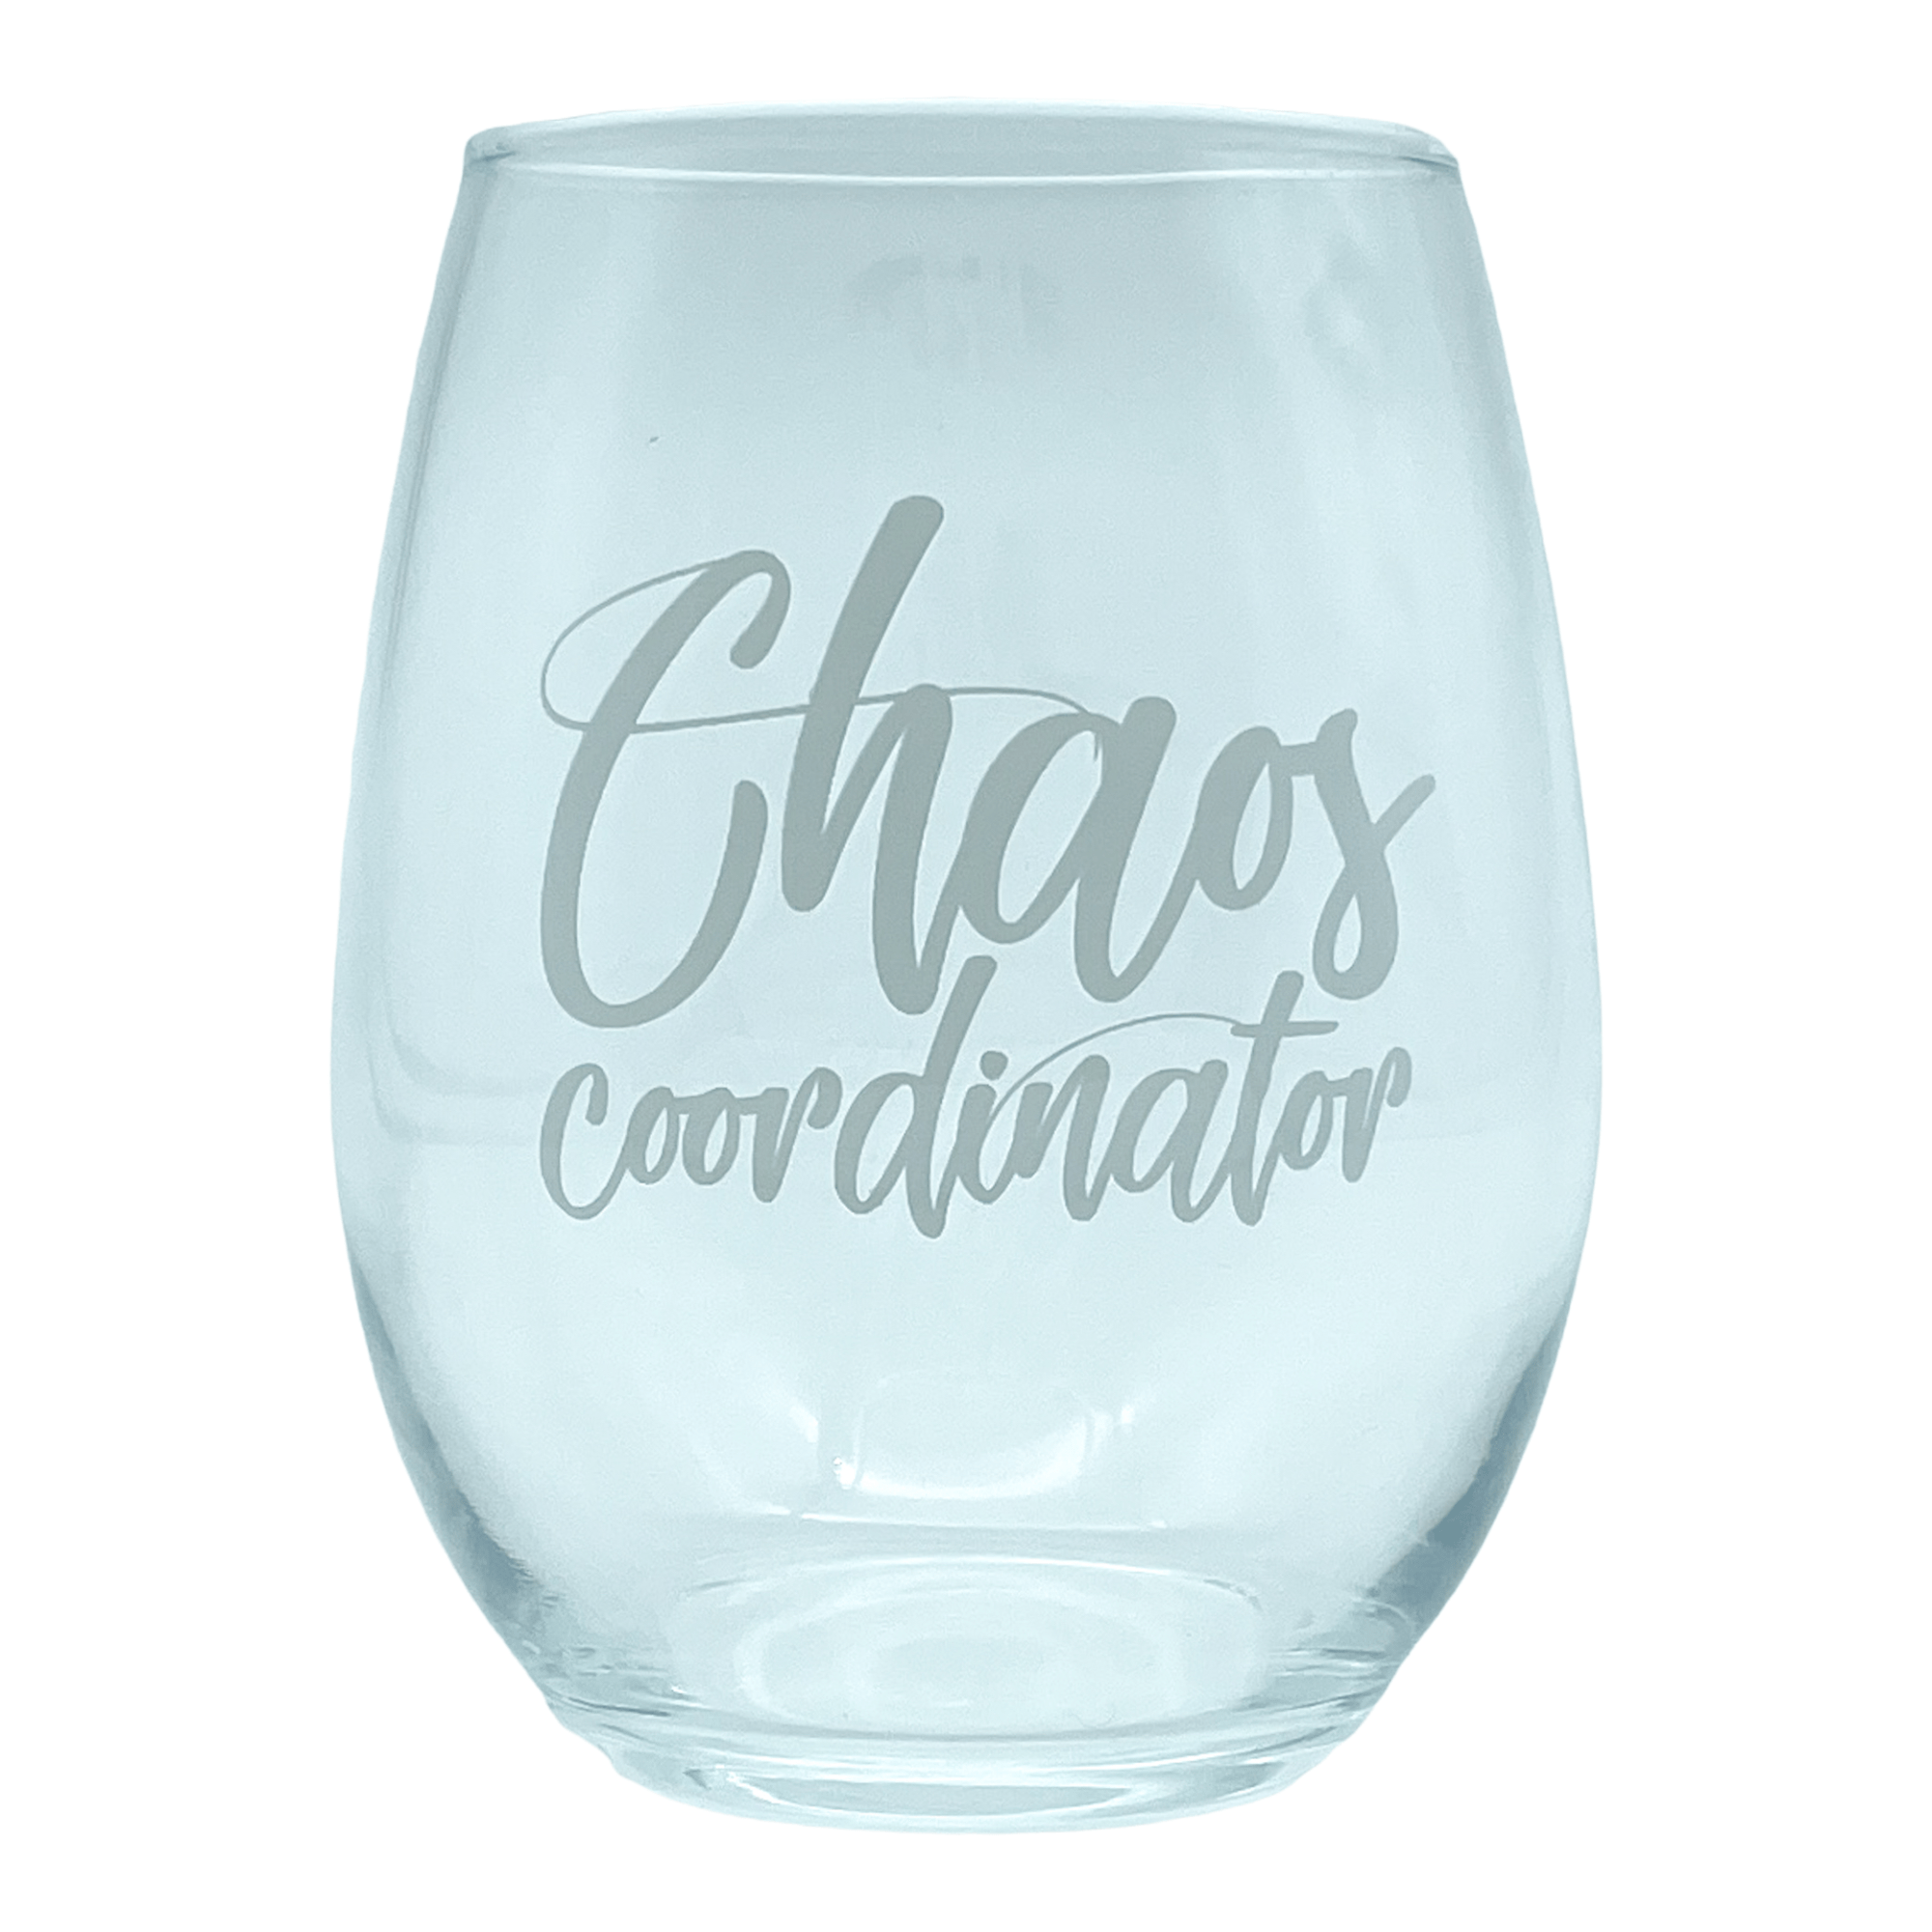 Chaos Coordinator  -  Crazy Dog T-Shirts